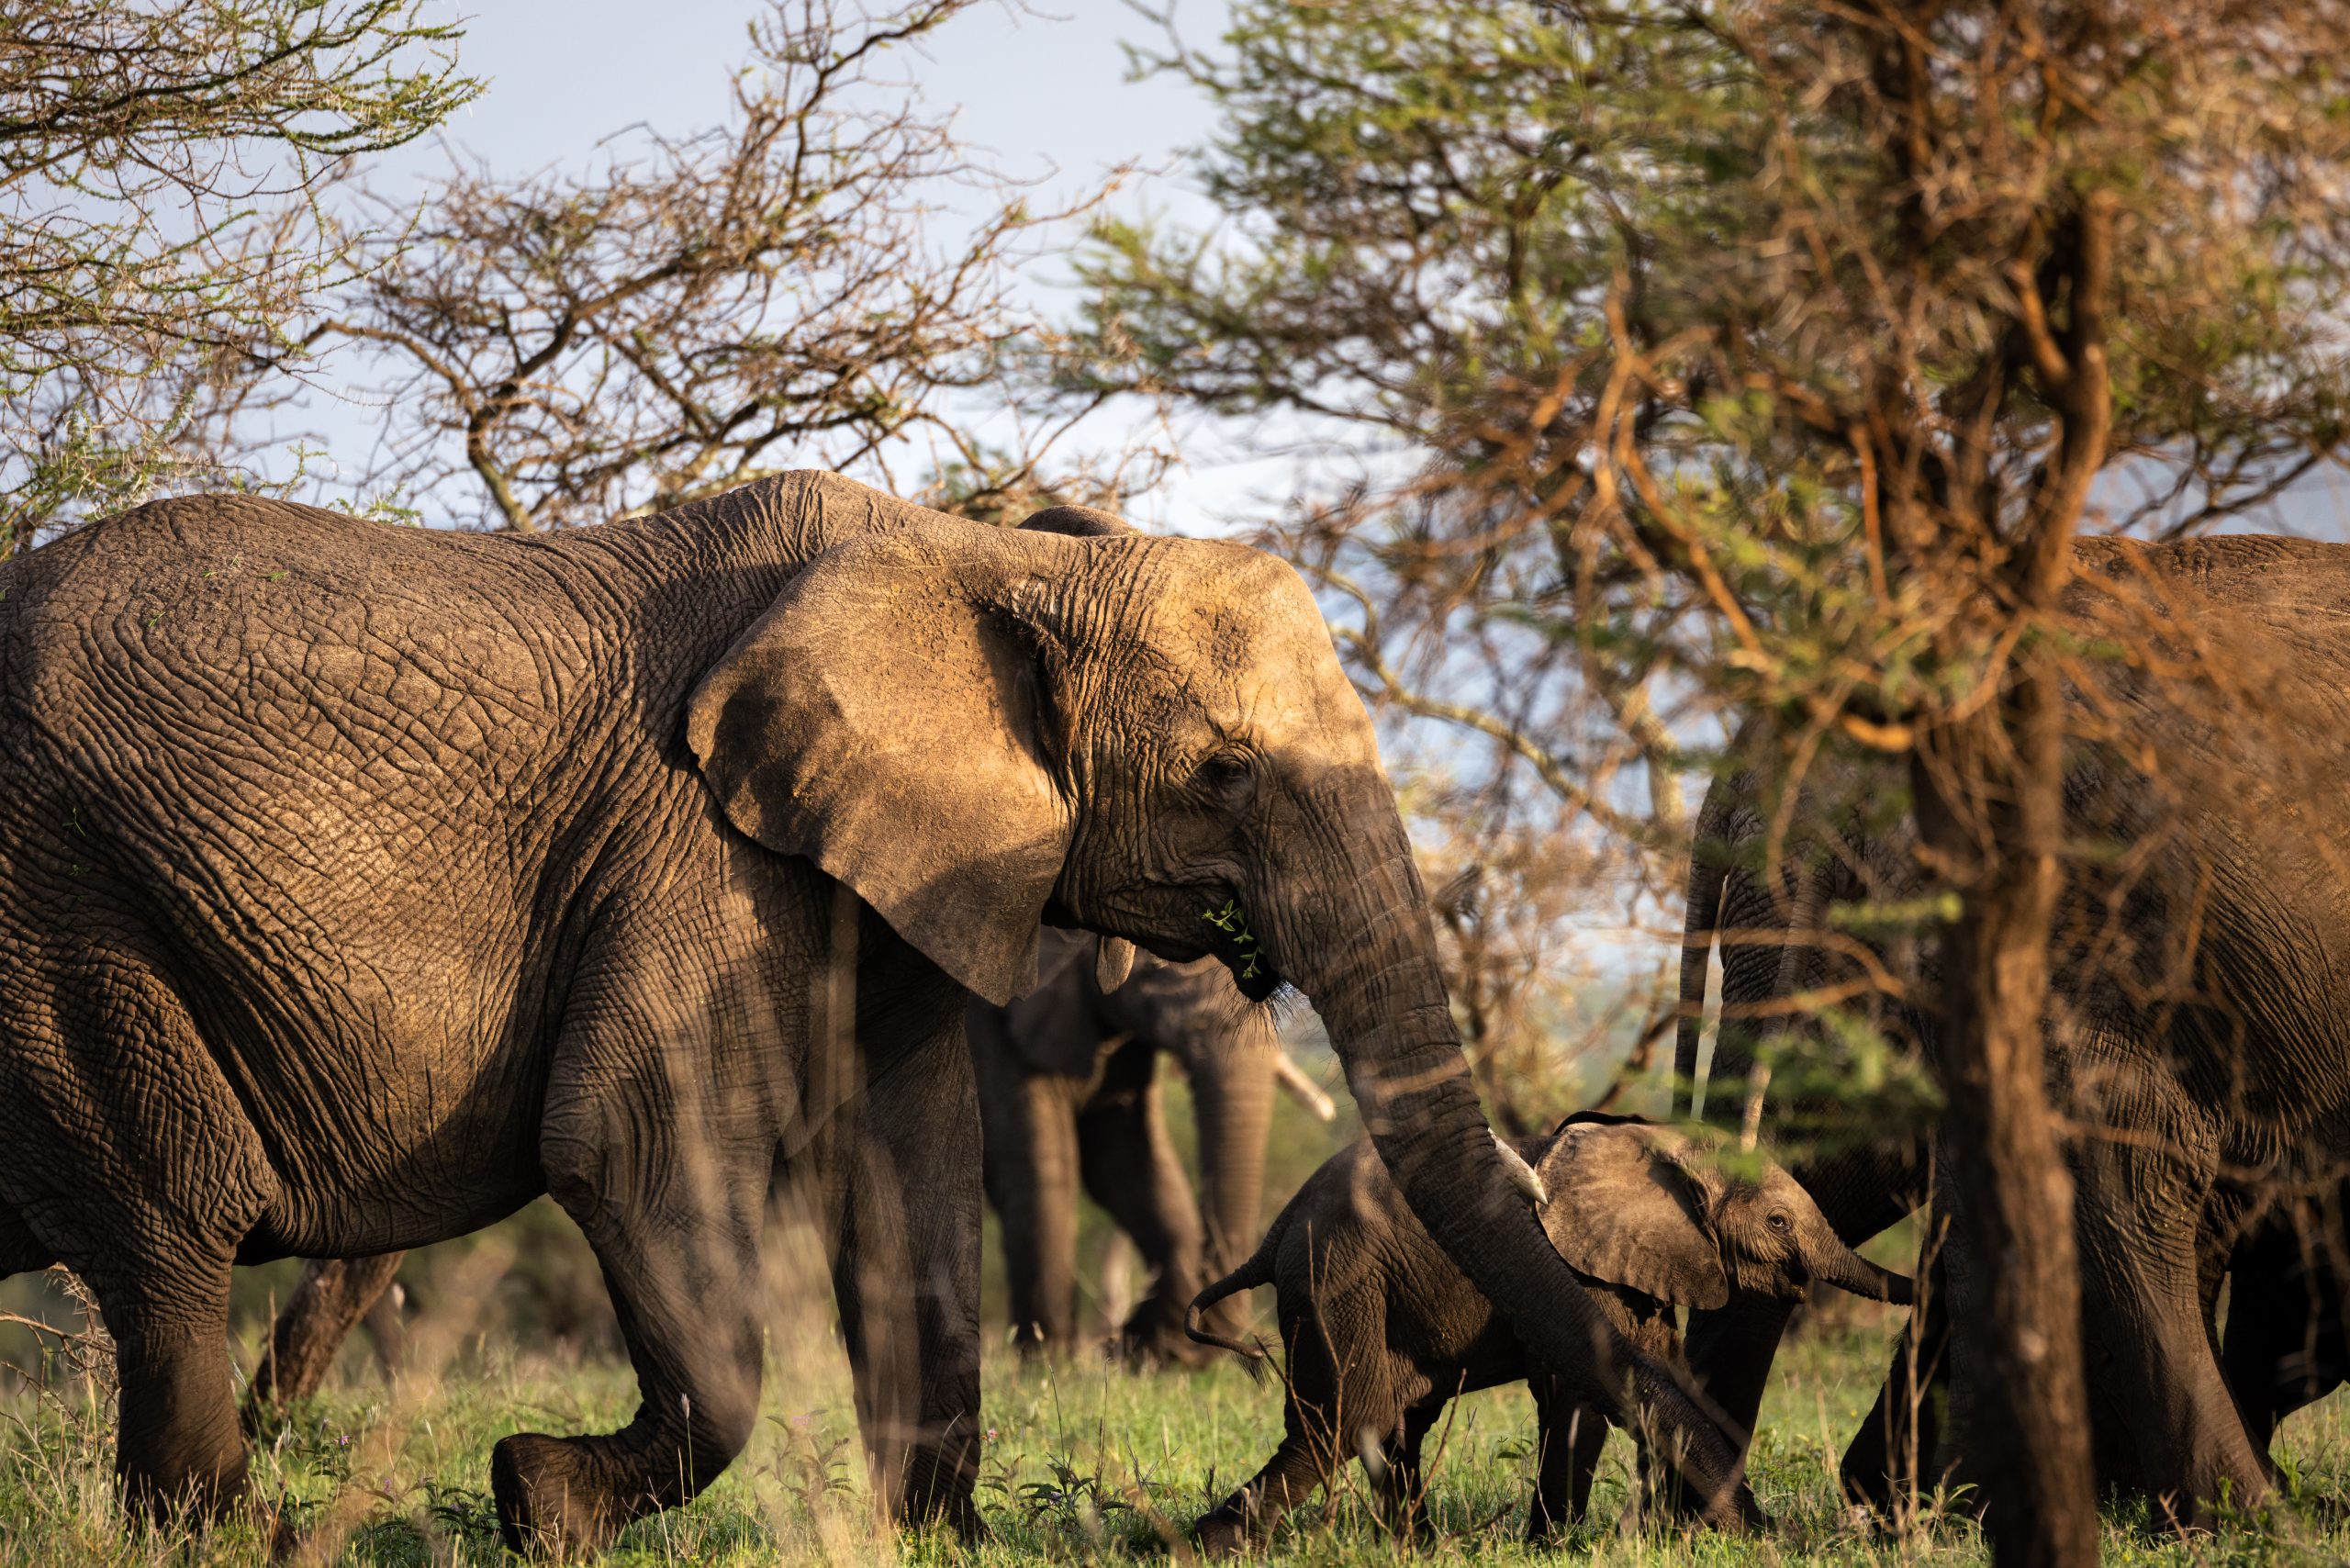 A wild elephant family in the savannah of the Serengeti National Park, Tanzania, Africa